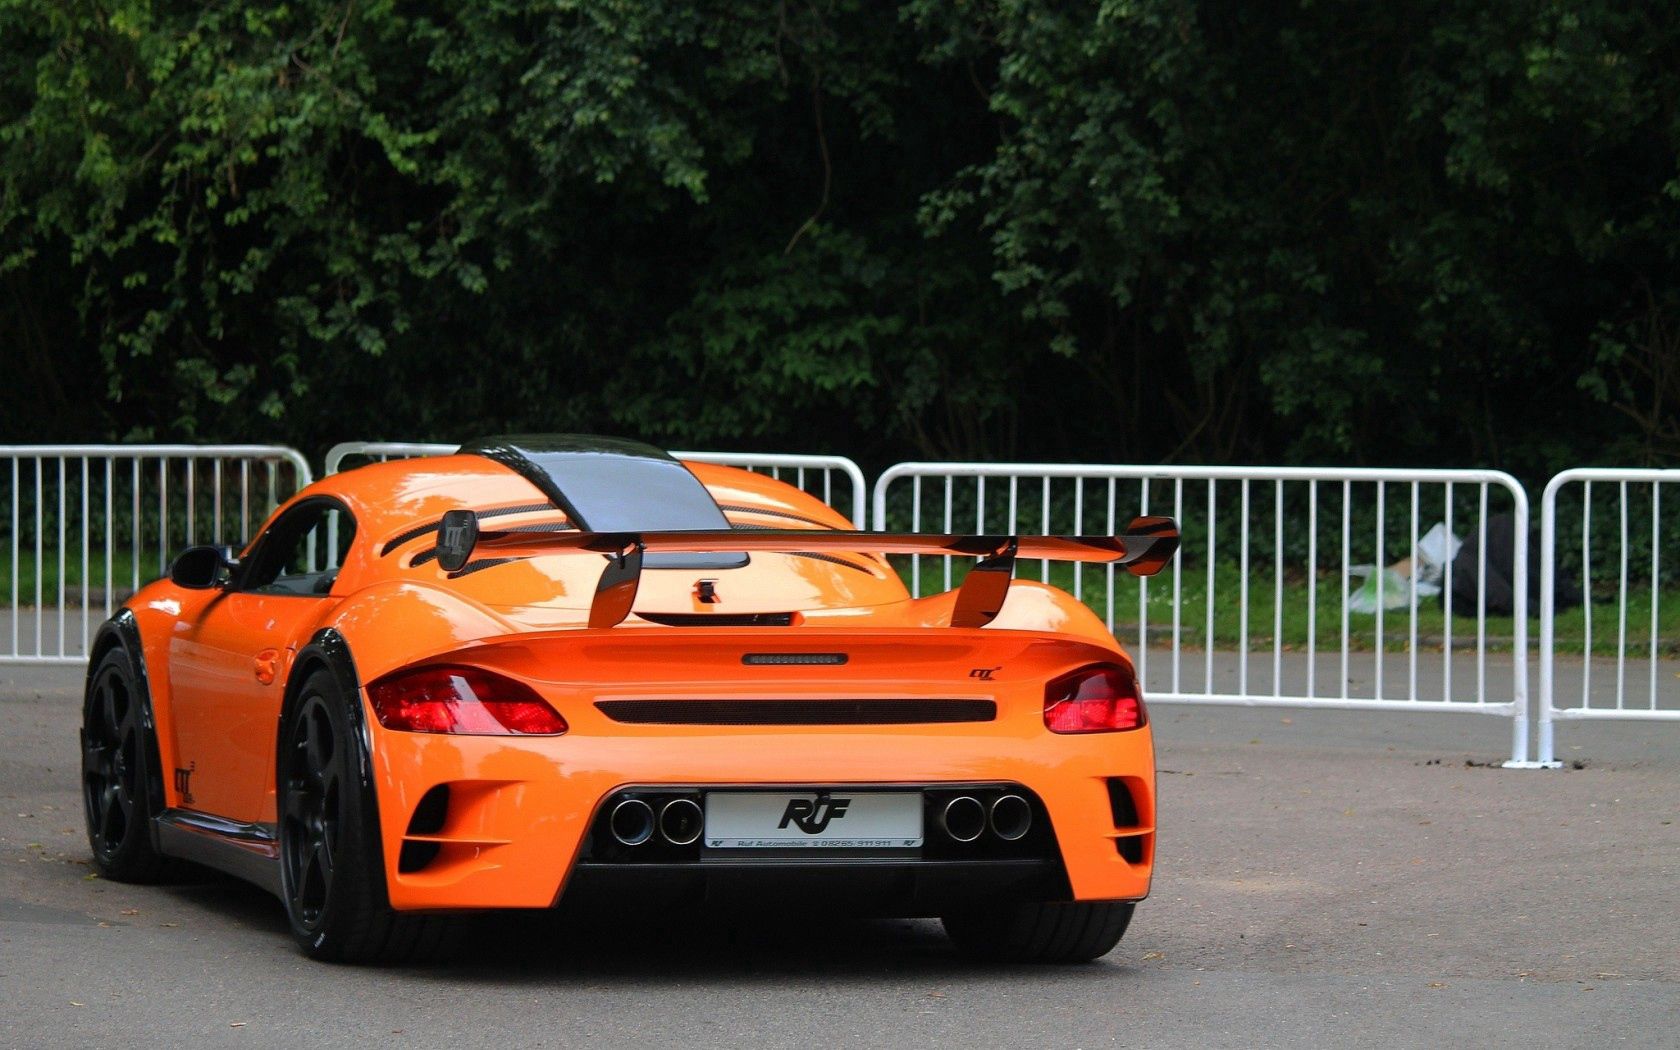 porsche, cars, orange, back view, rear view, roof, ruf Image for desktop